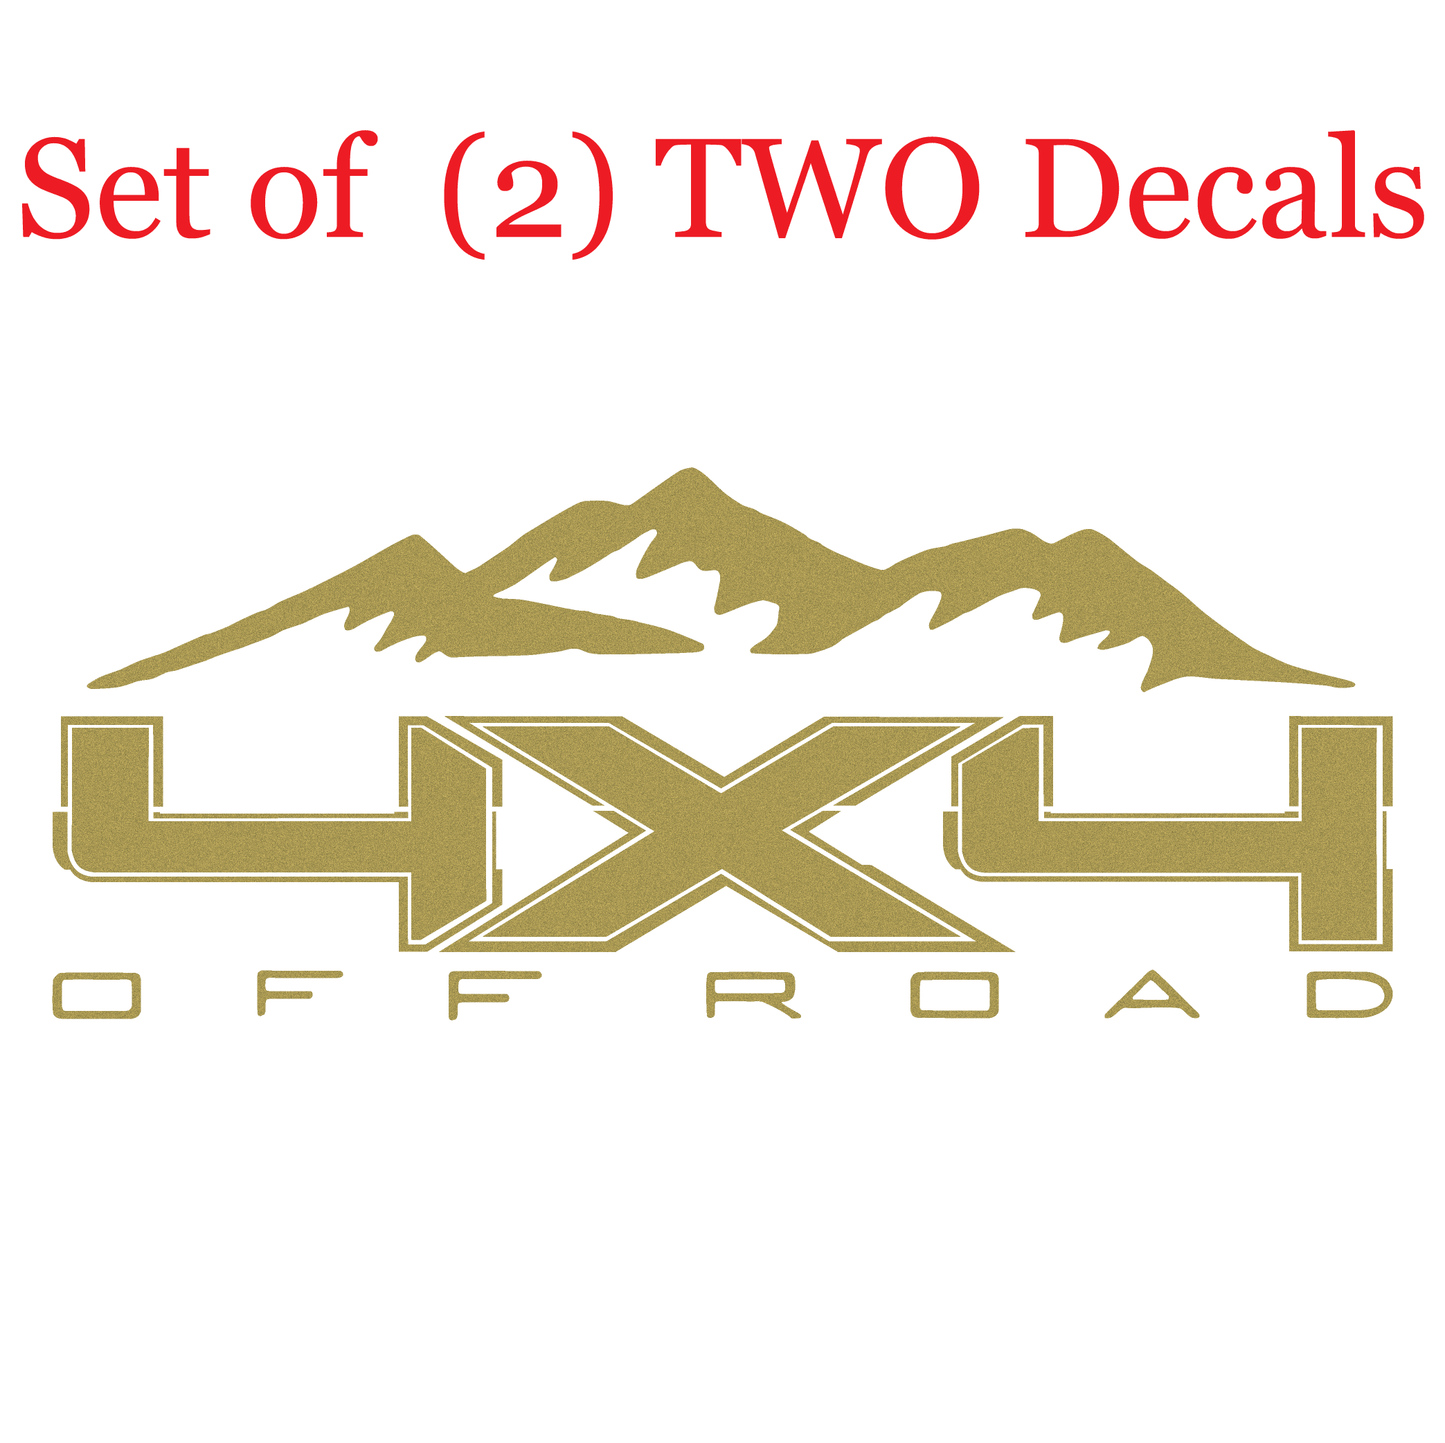 Shop Vinyl Design F-150 F-250 Trucks Replacement Bedside Decals Mountain 4 x 4 Off Road #09 Vehicle decal 001 Gold Metallic Shop Vinyl Design decals stickers